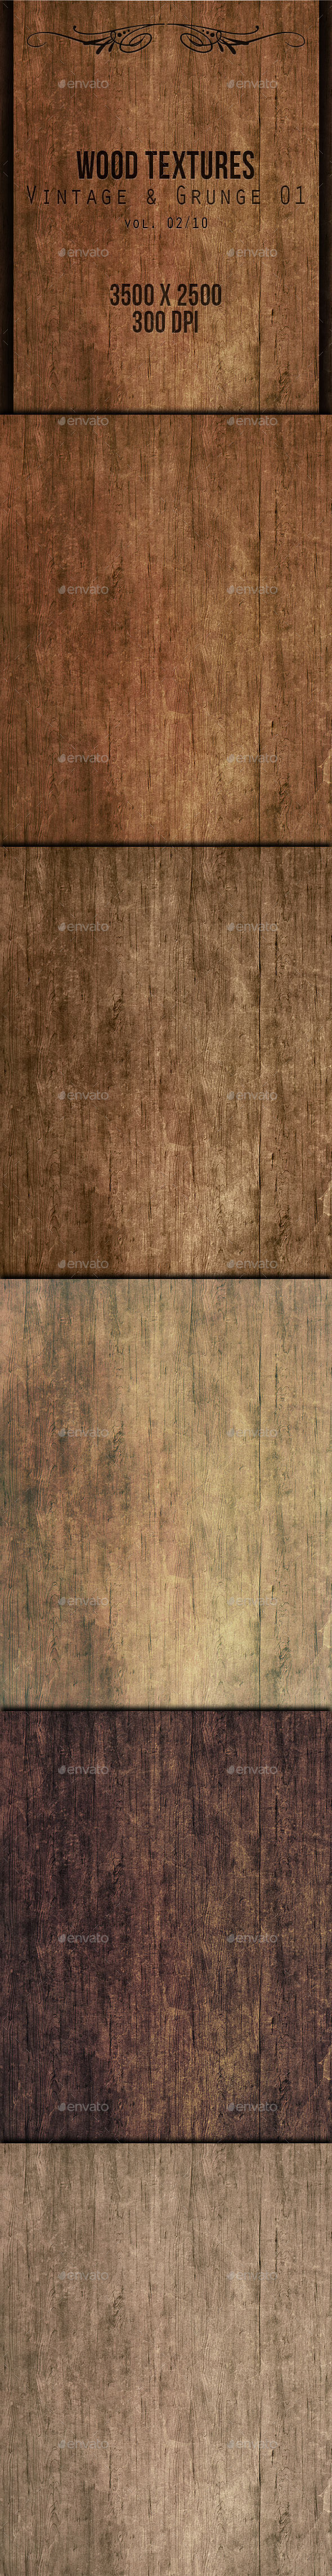 Wood textures vintage grunge01 vol.02 preview